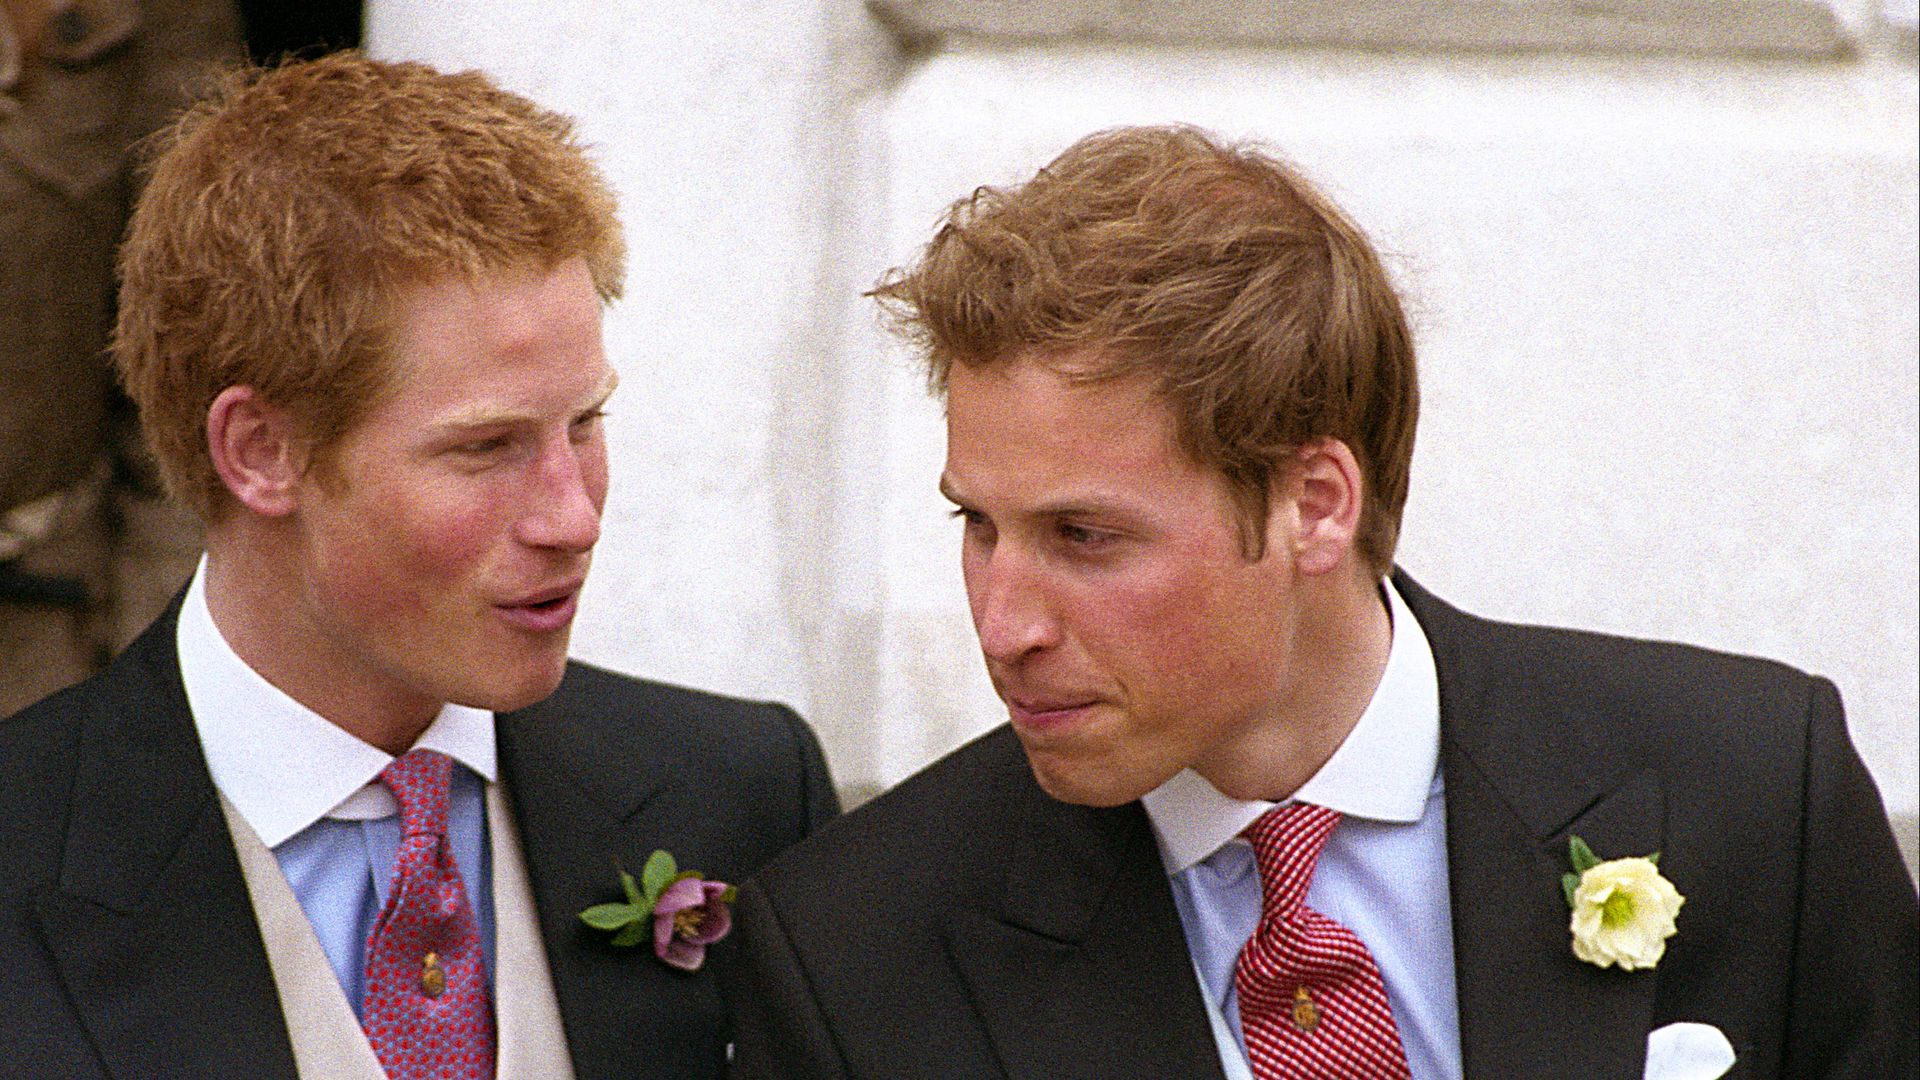 Prince Harry joking with Prince William